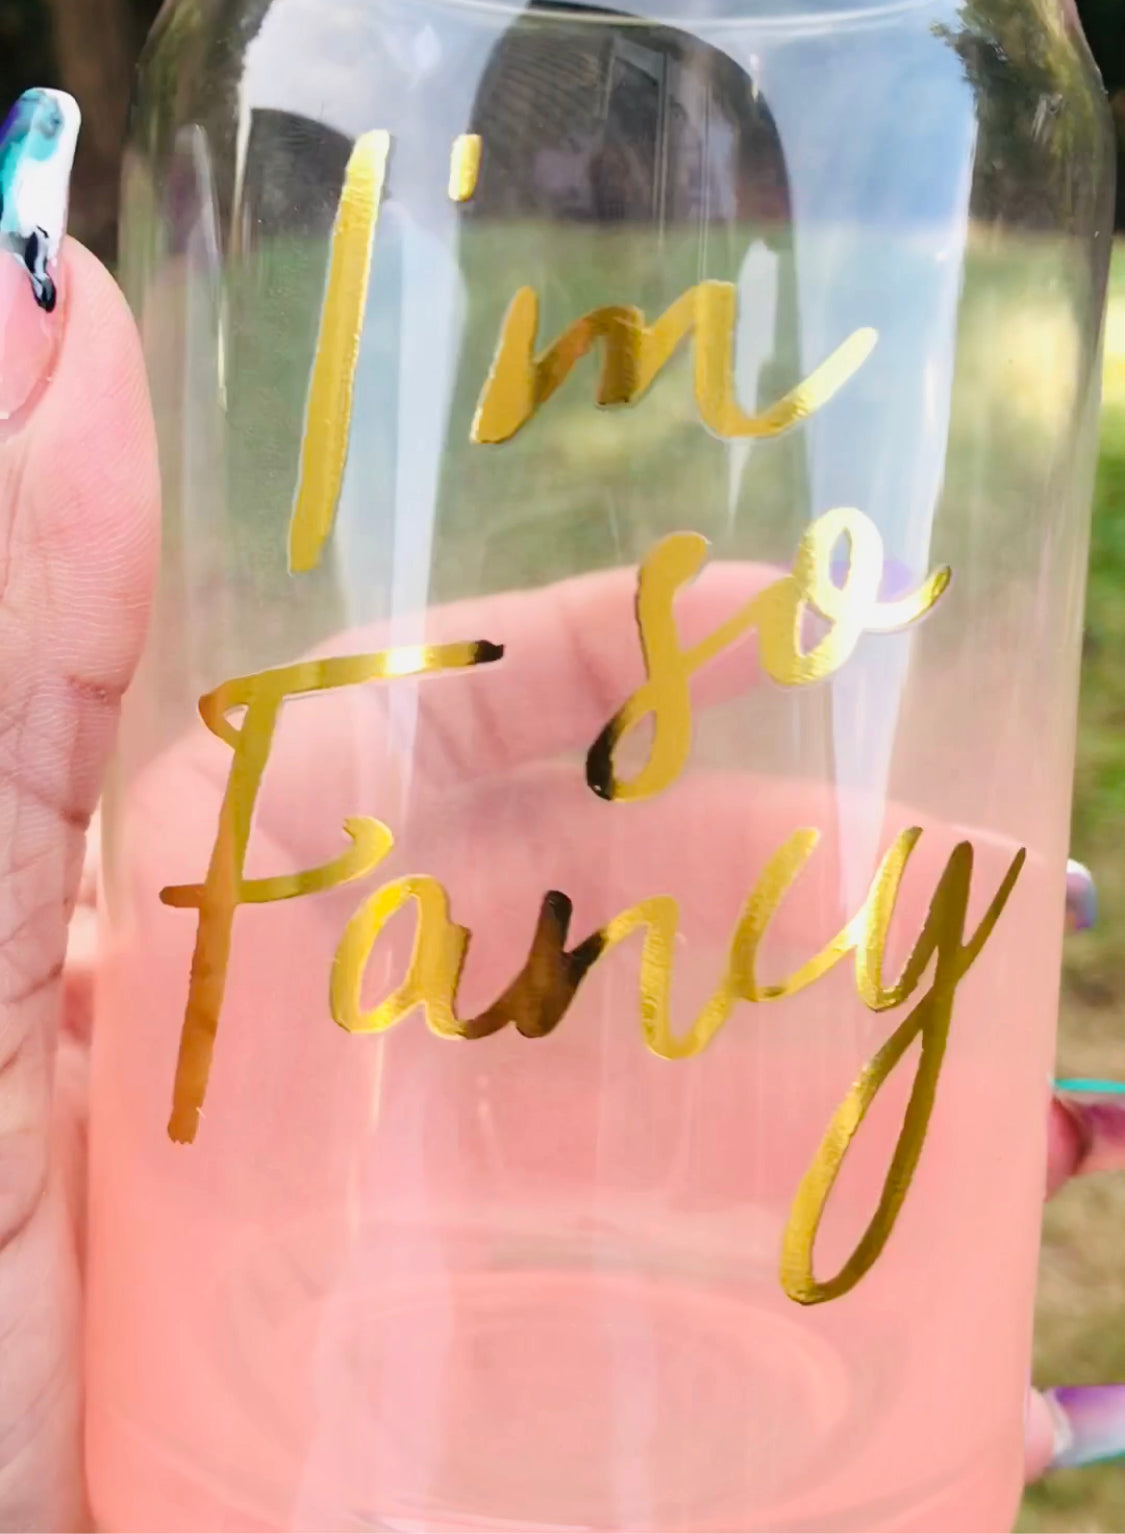 I’m So Fancy (glass)